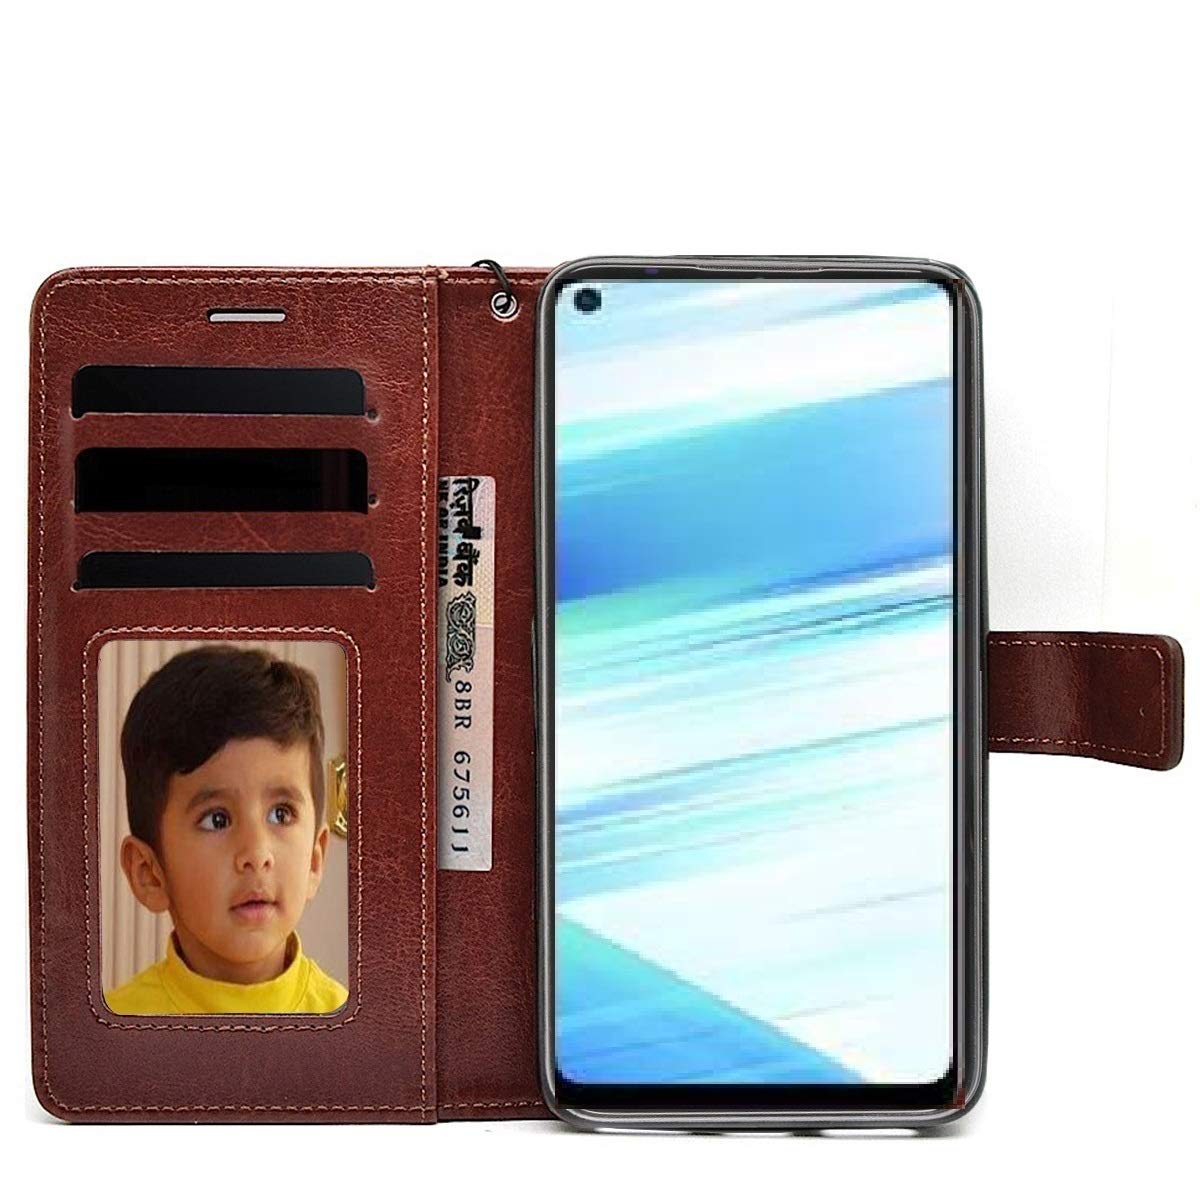 Bracevor Vivo Z1 Pro Flip Cover Case | Premium Leather | Inner TPU | Foldable Stand | Wallet Card Slots - Executive Brown